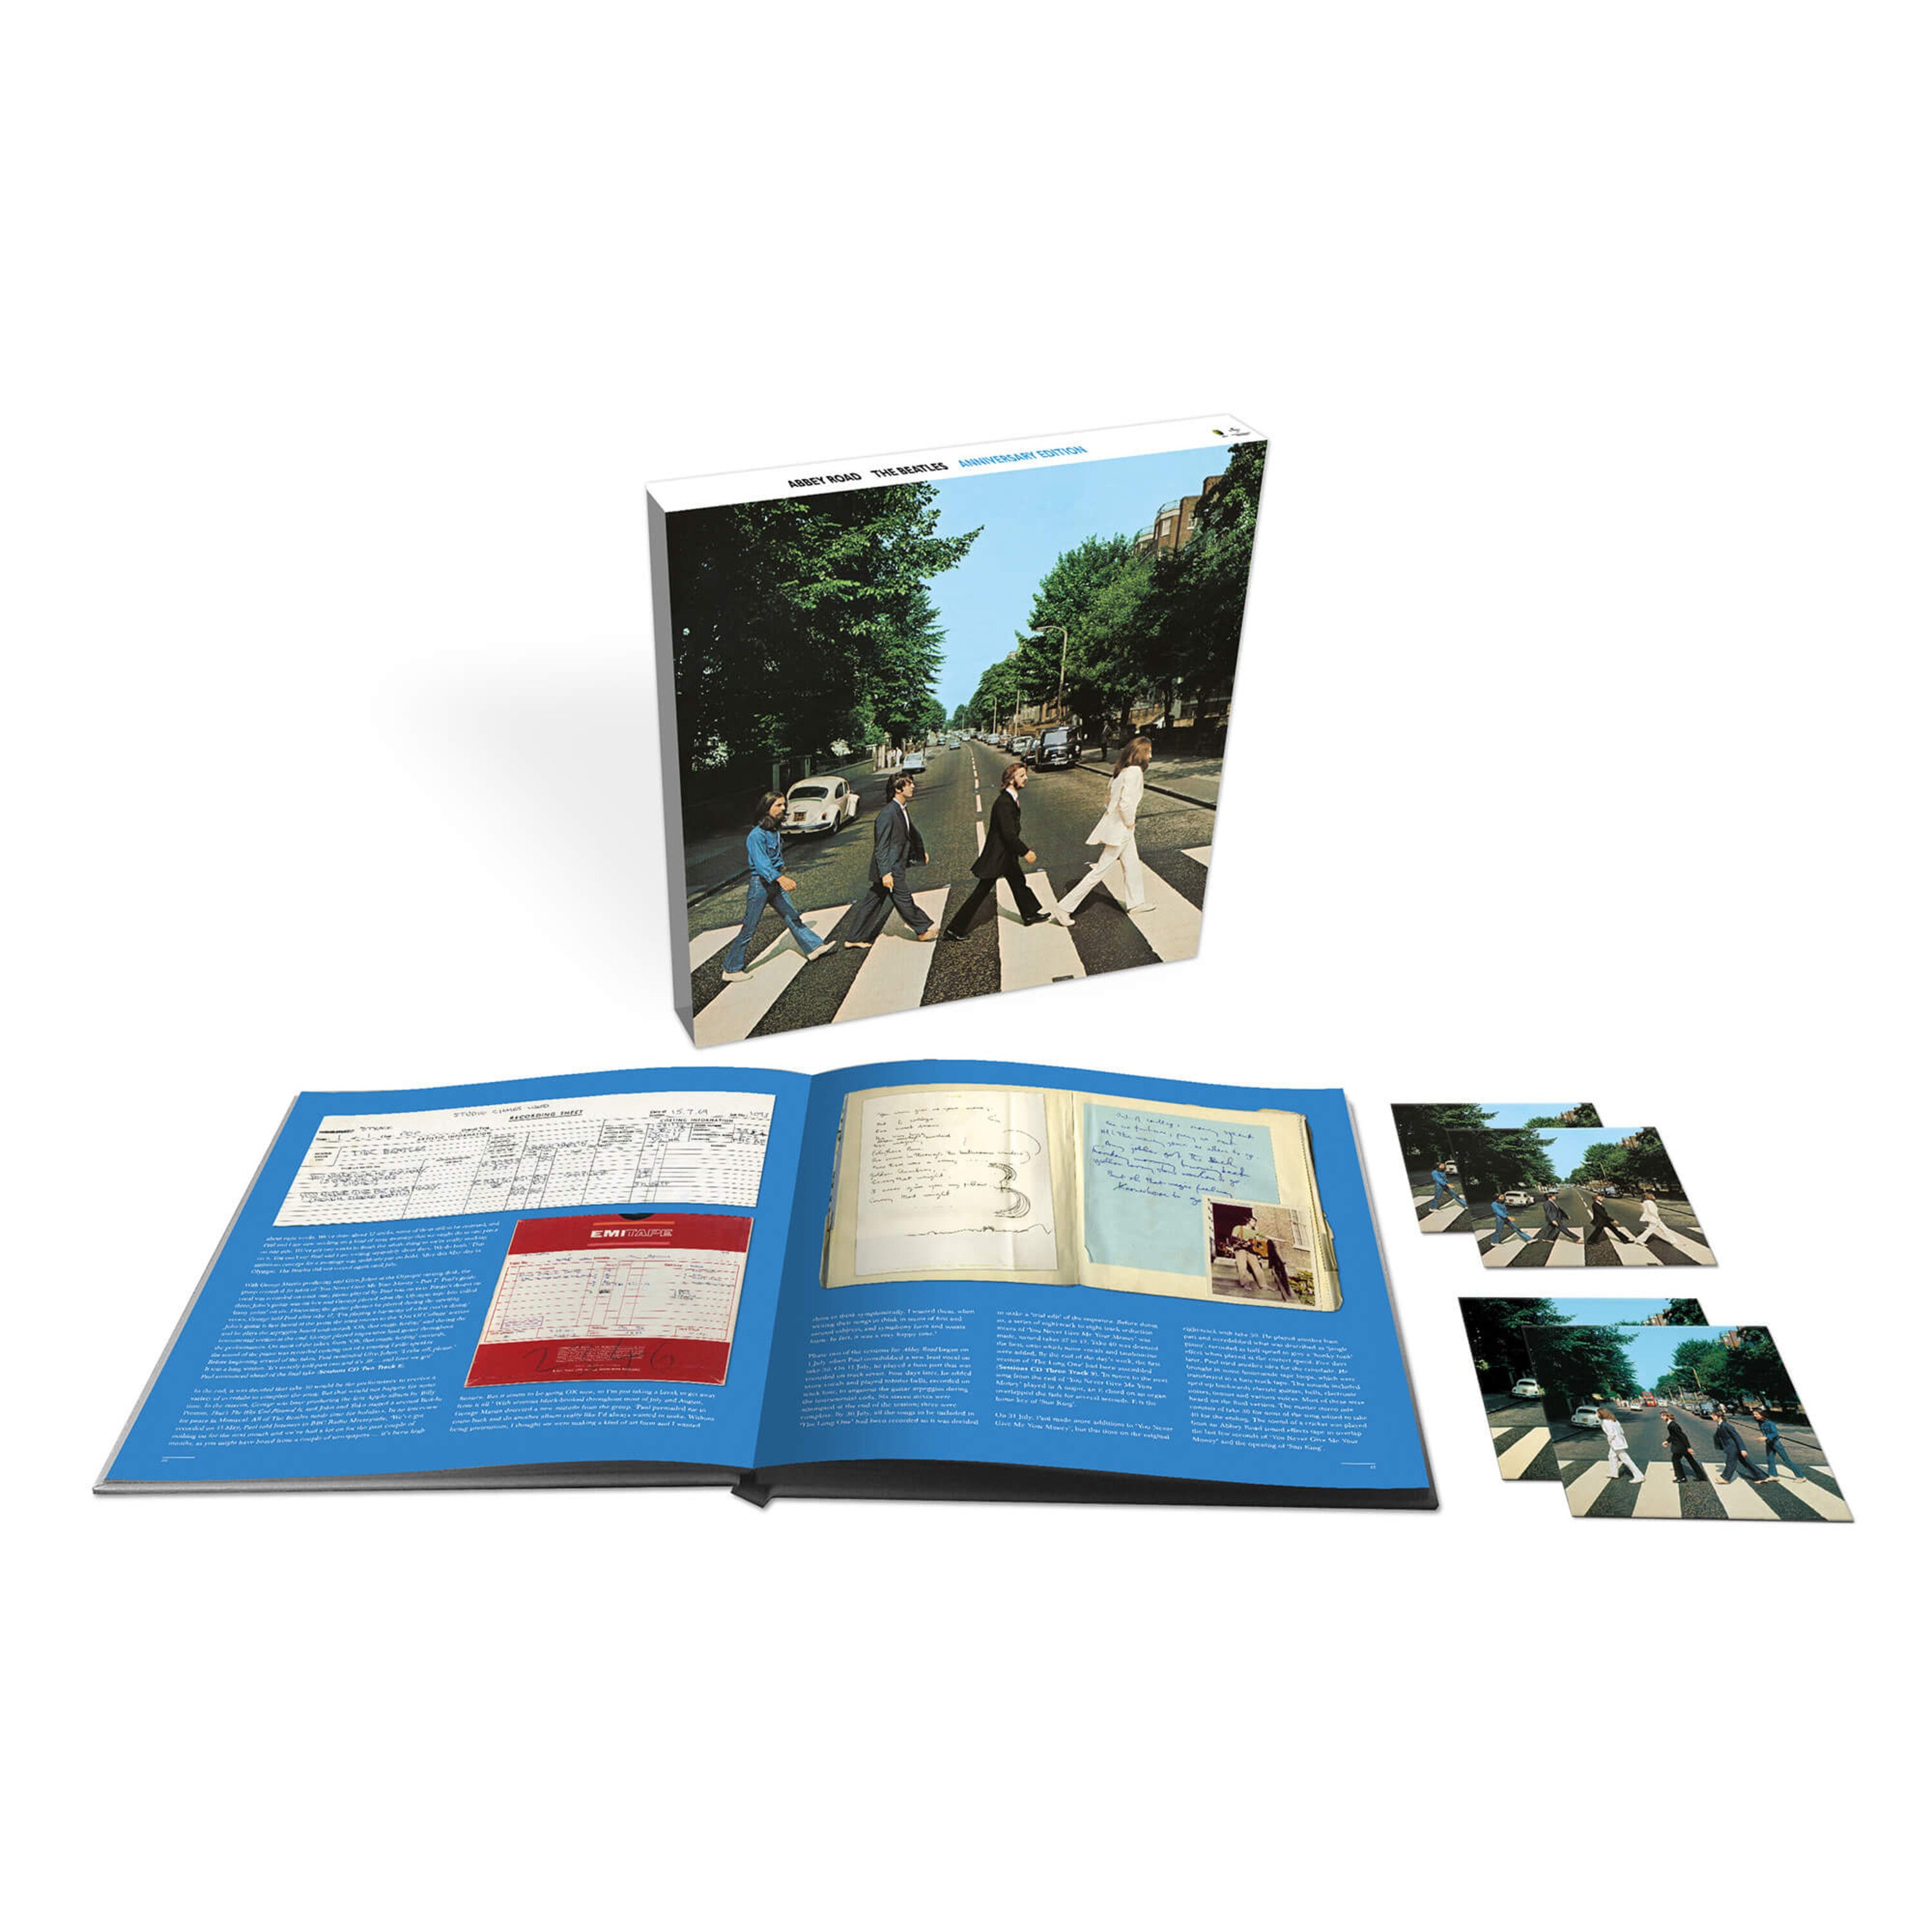 https://images.bravado.de/prod/product-assets/product-asset-data/beatles-the/the-beatles-international-1/products/130643/web/291977/image-thumb__291977__3000x3000_original/The-Beatles-Abbey-Road-Anniversary-Edition-Ltd-Super-Deluxe-Box-CD-130643-291977.jpg